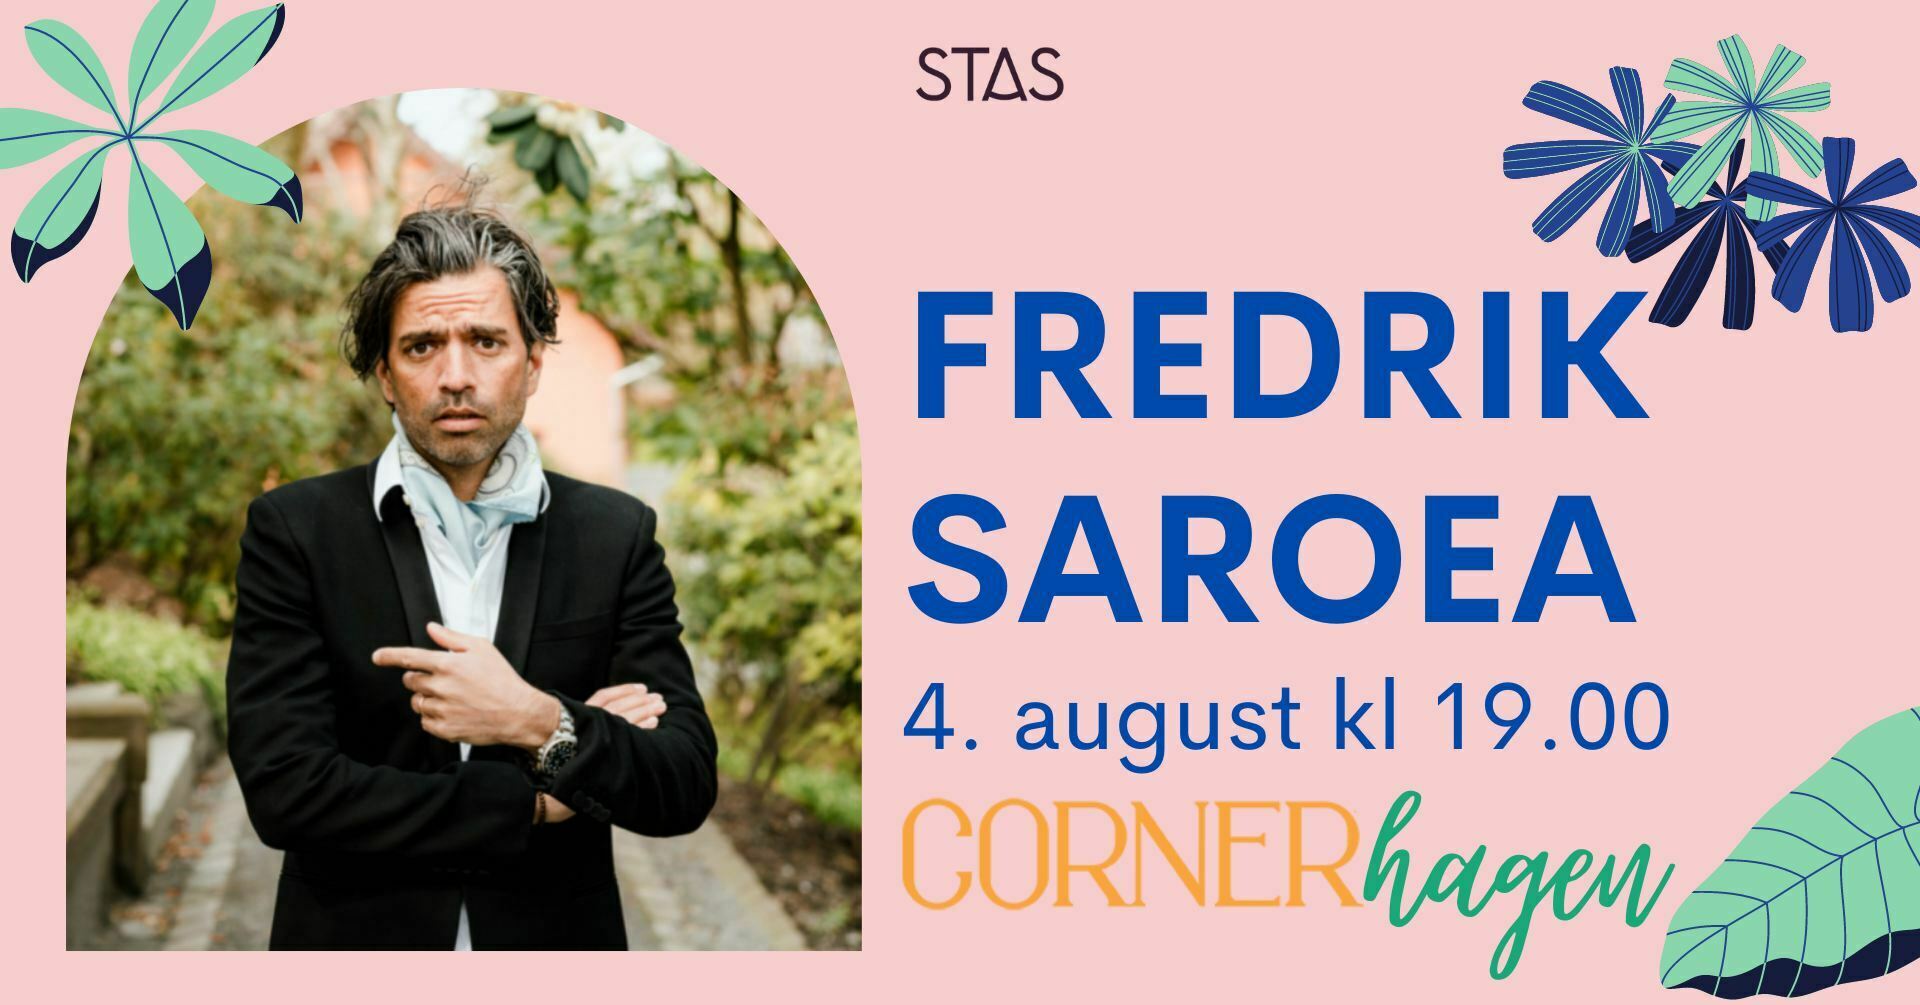 Fredrik Saroea i Cornerhagen  - Stas Artist 